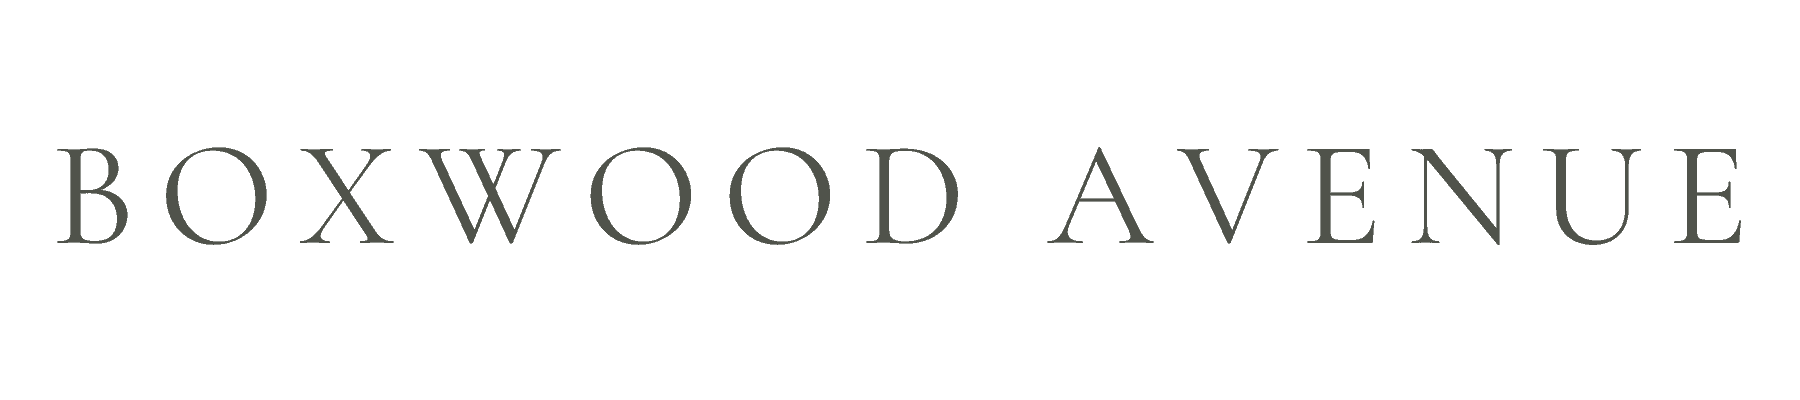 Boxwood Avenue Main Logo